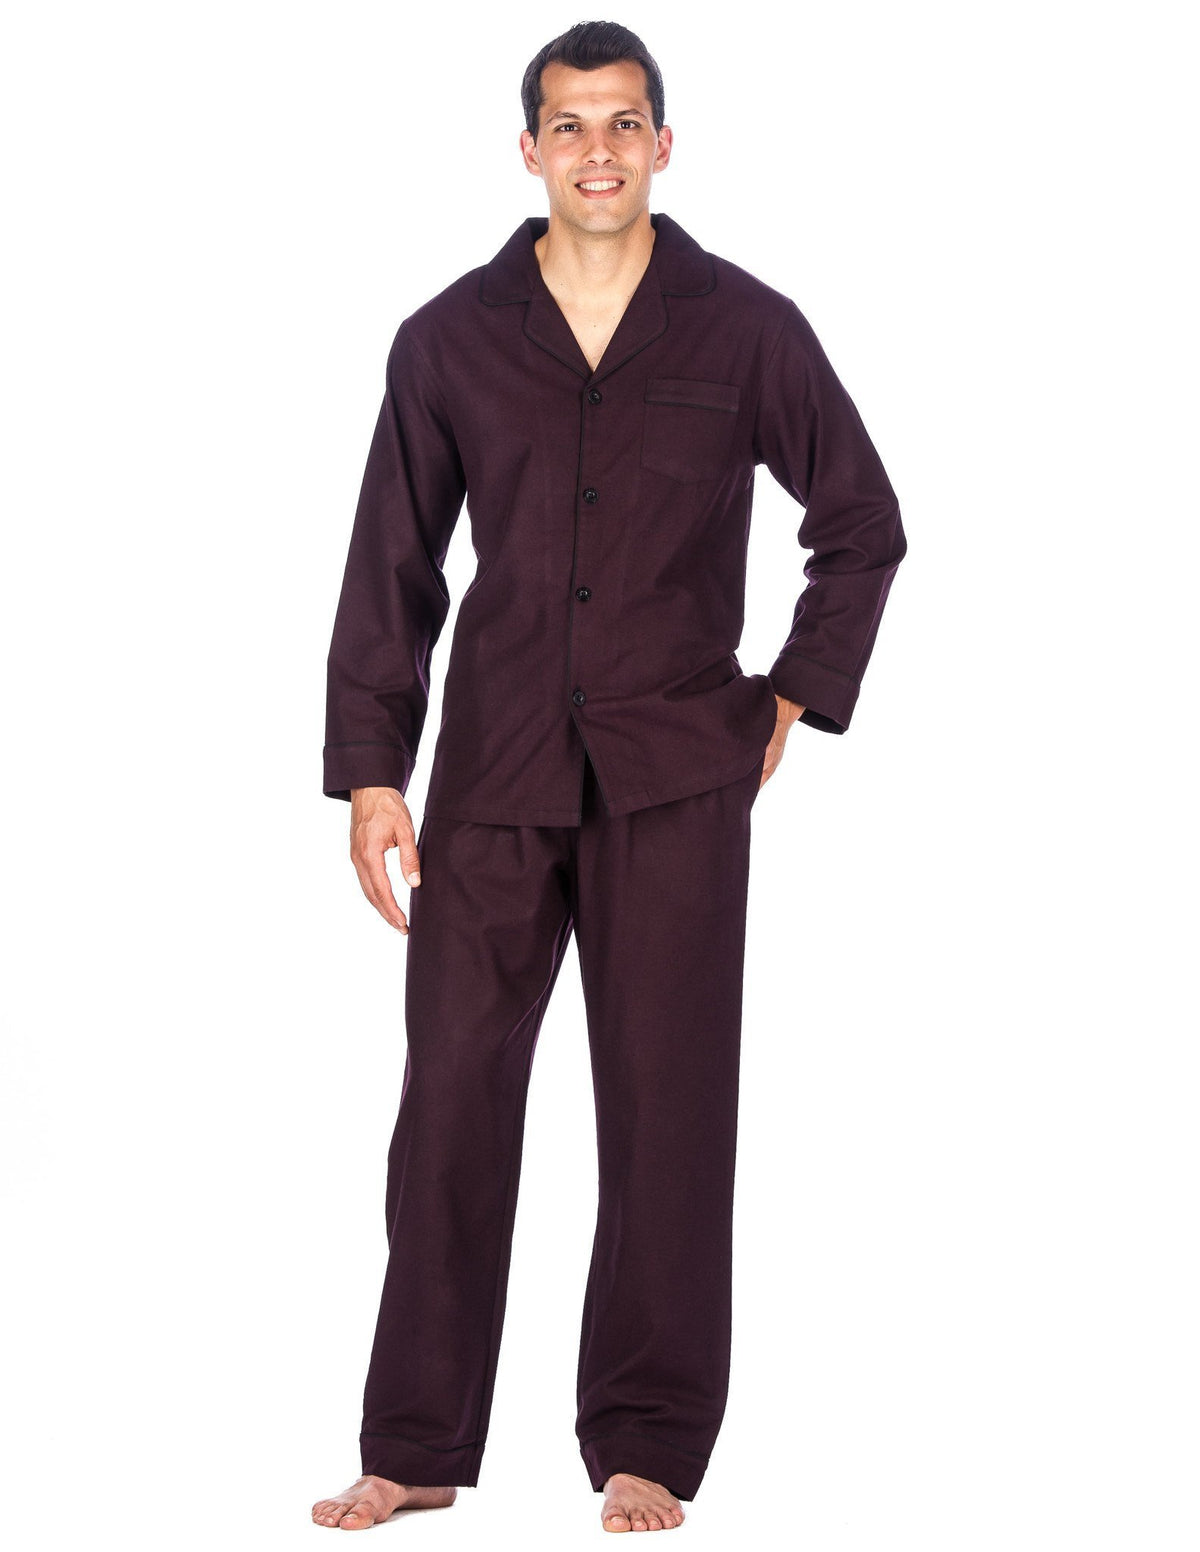 Relaxed Fit Men's Premium 100% Cotton Flannel Pajama Sleepwear Set - Fig